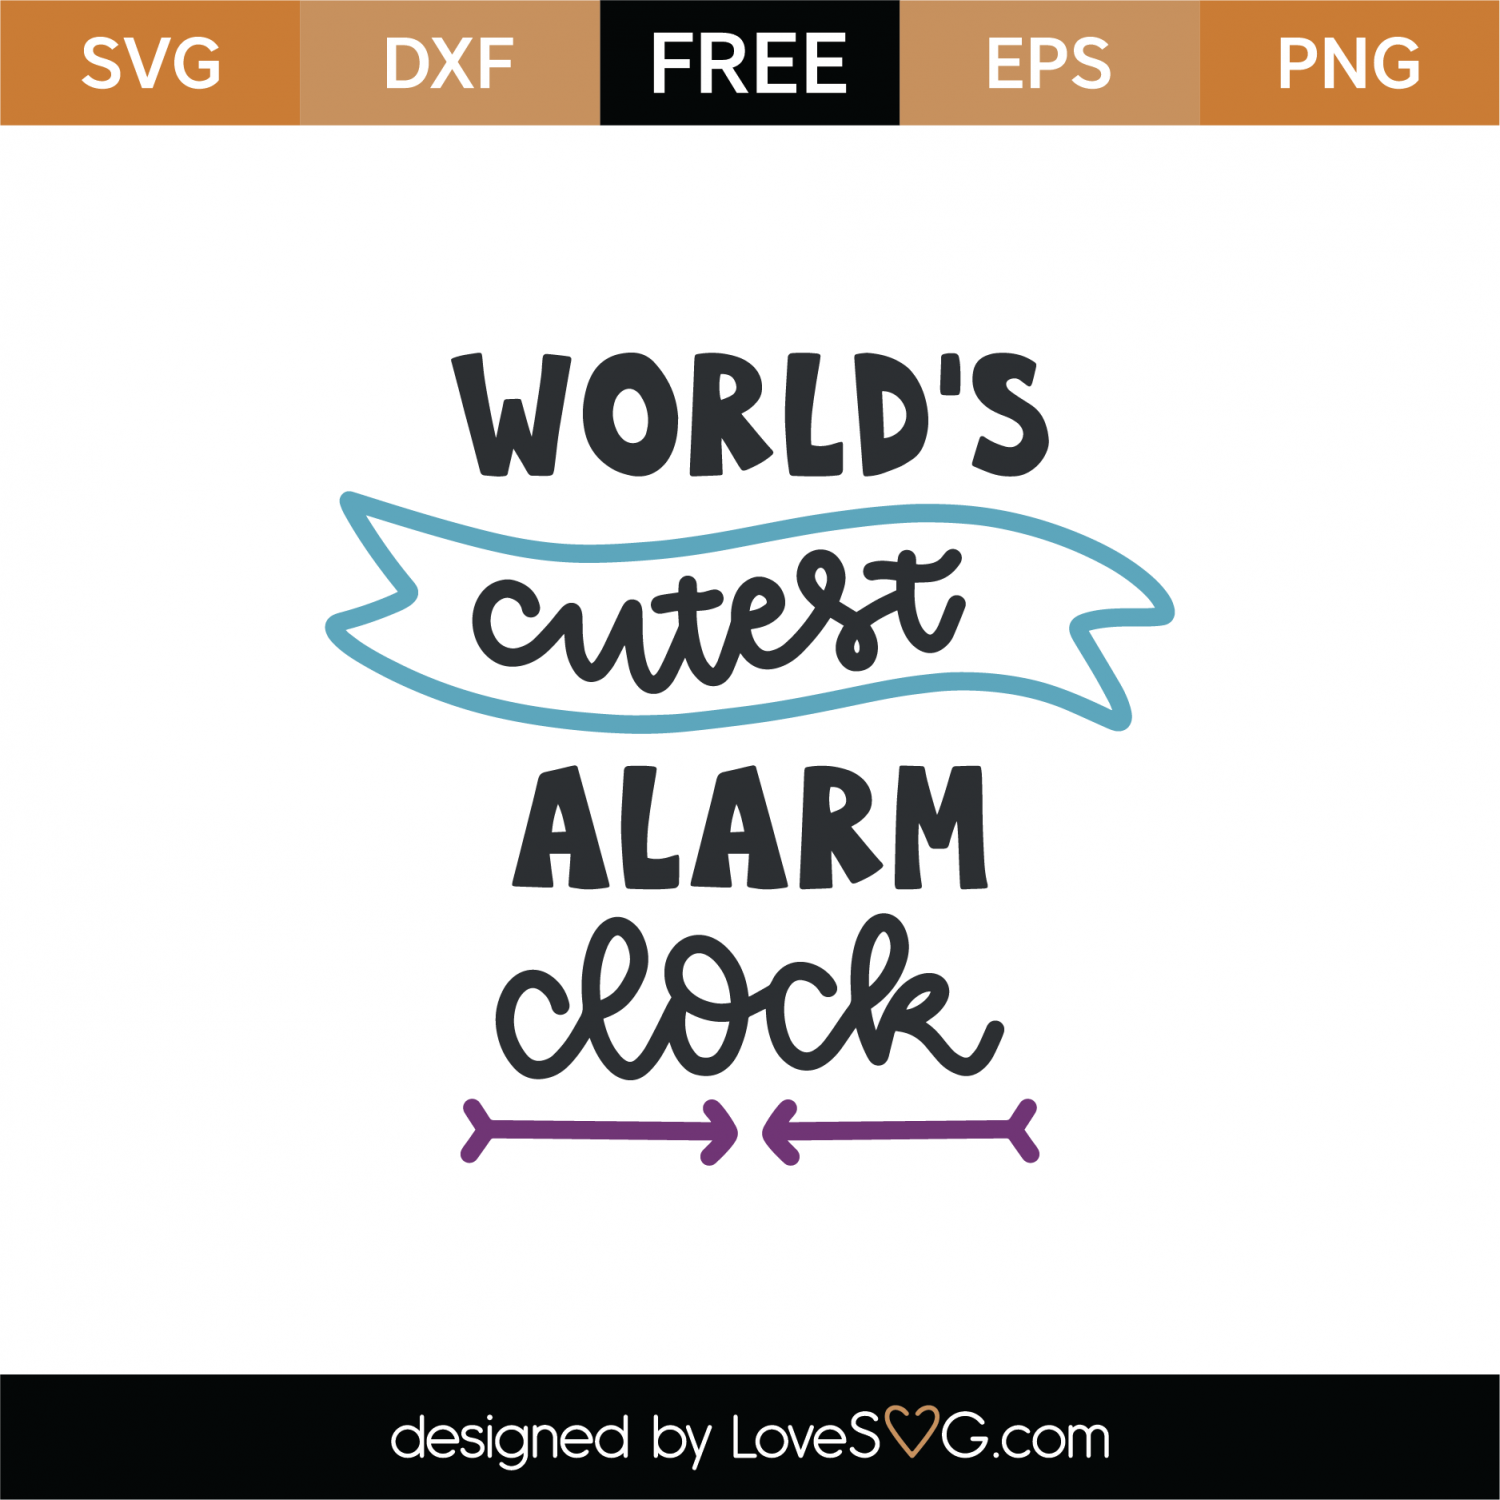 Download Free World's Cutest Alarm Clock SVG Cut File | Lovesvg.com